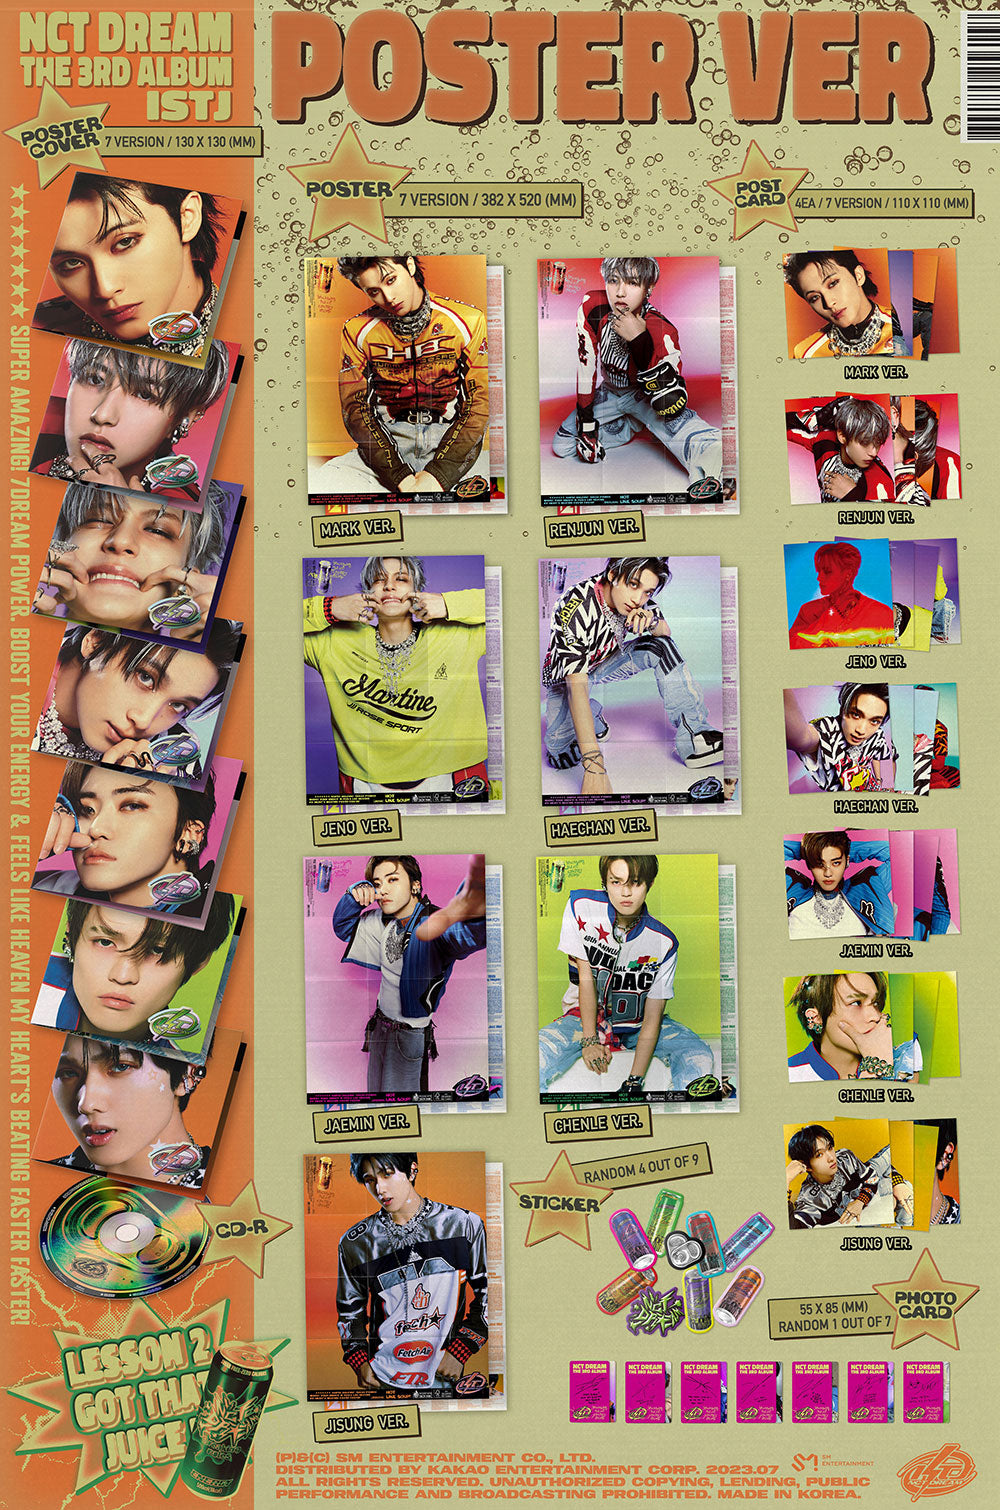 NCT DREAM 3rd Album - ISTJ (Poster Ver.) – KPOP ONLINE STORE USA